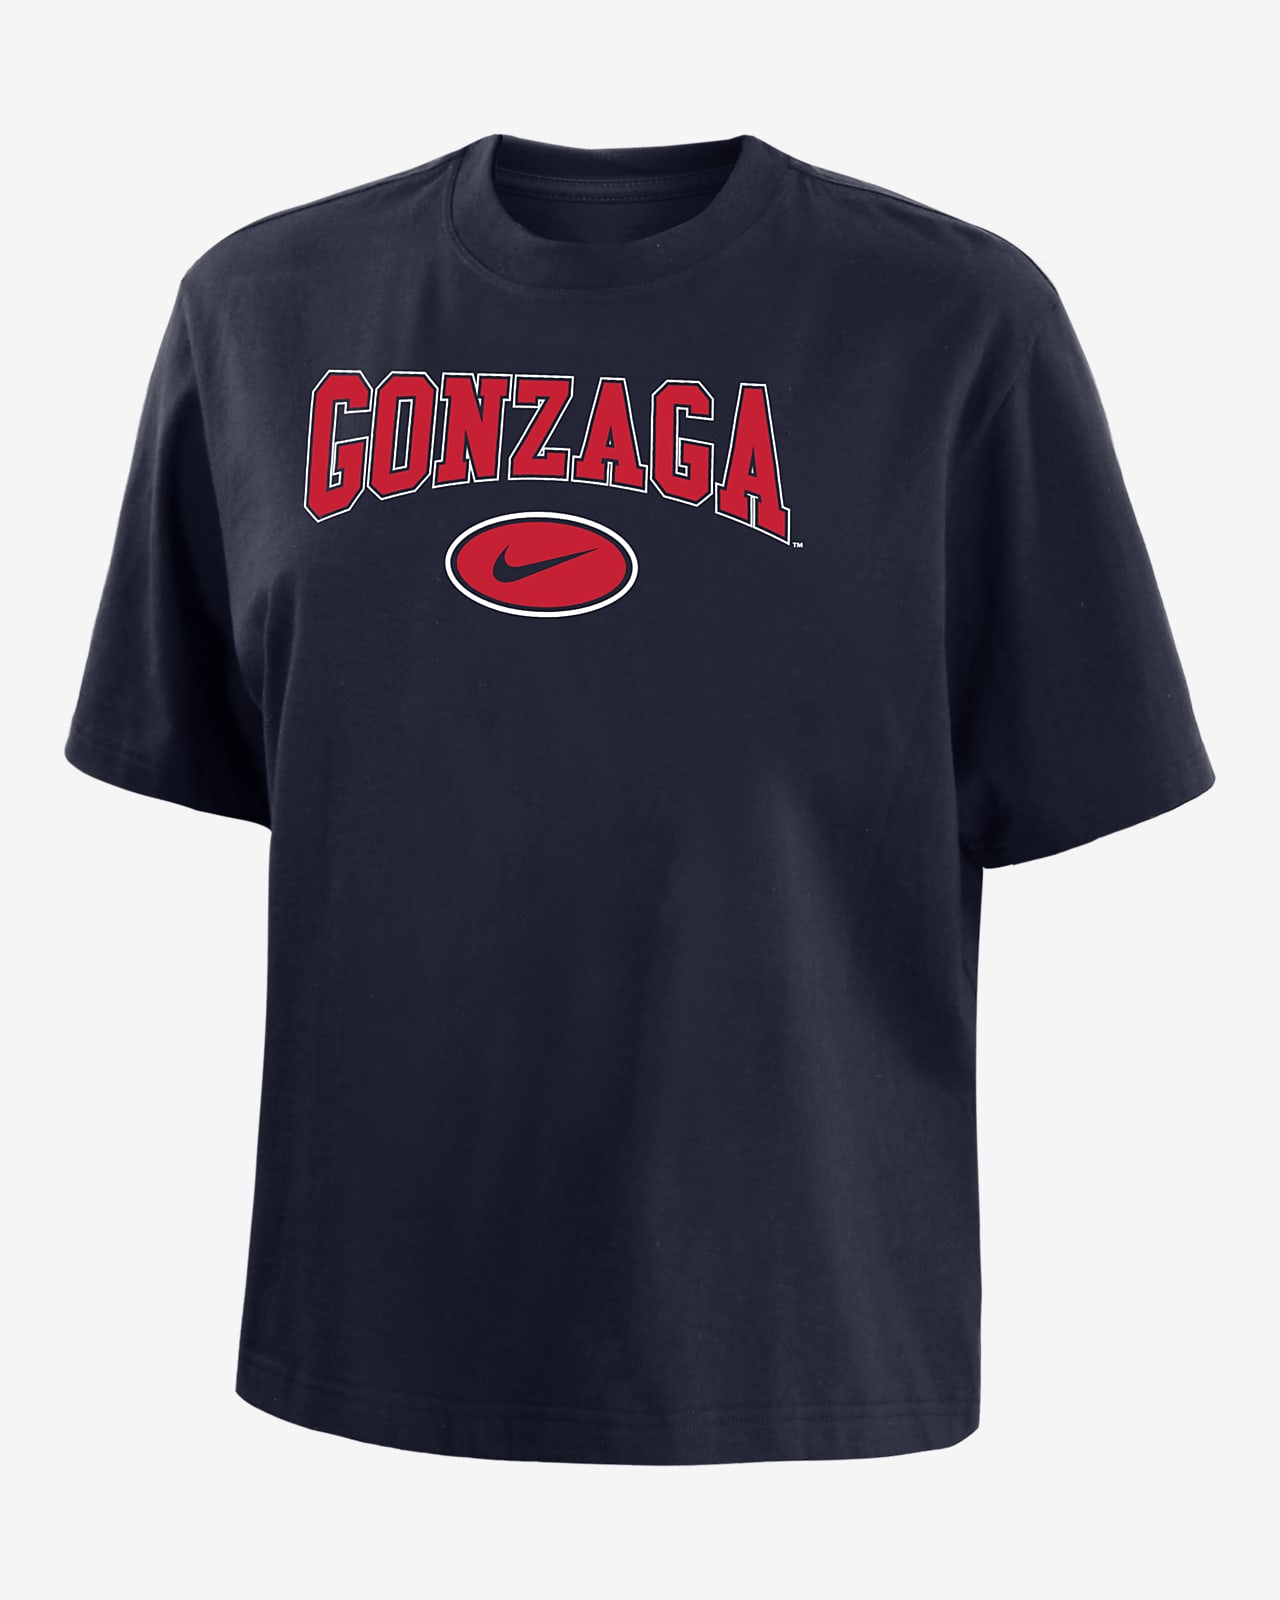 Gonzaga Women's Nike College Boxy T-Shirt